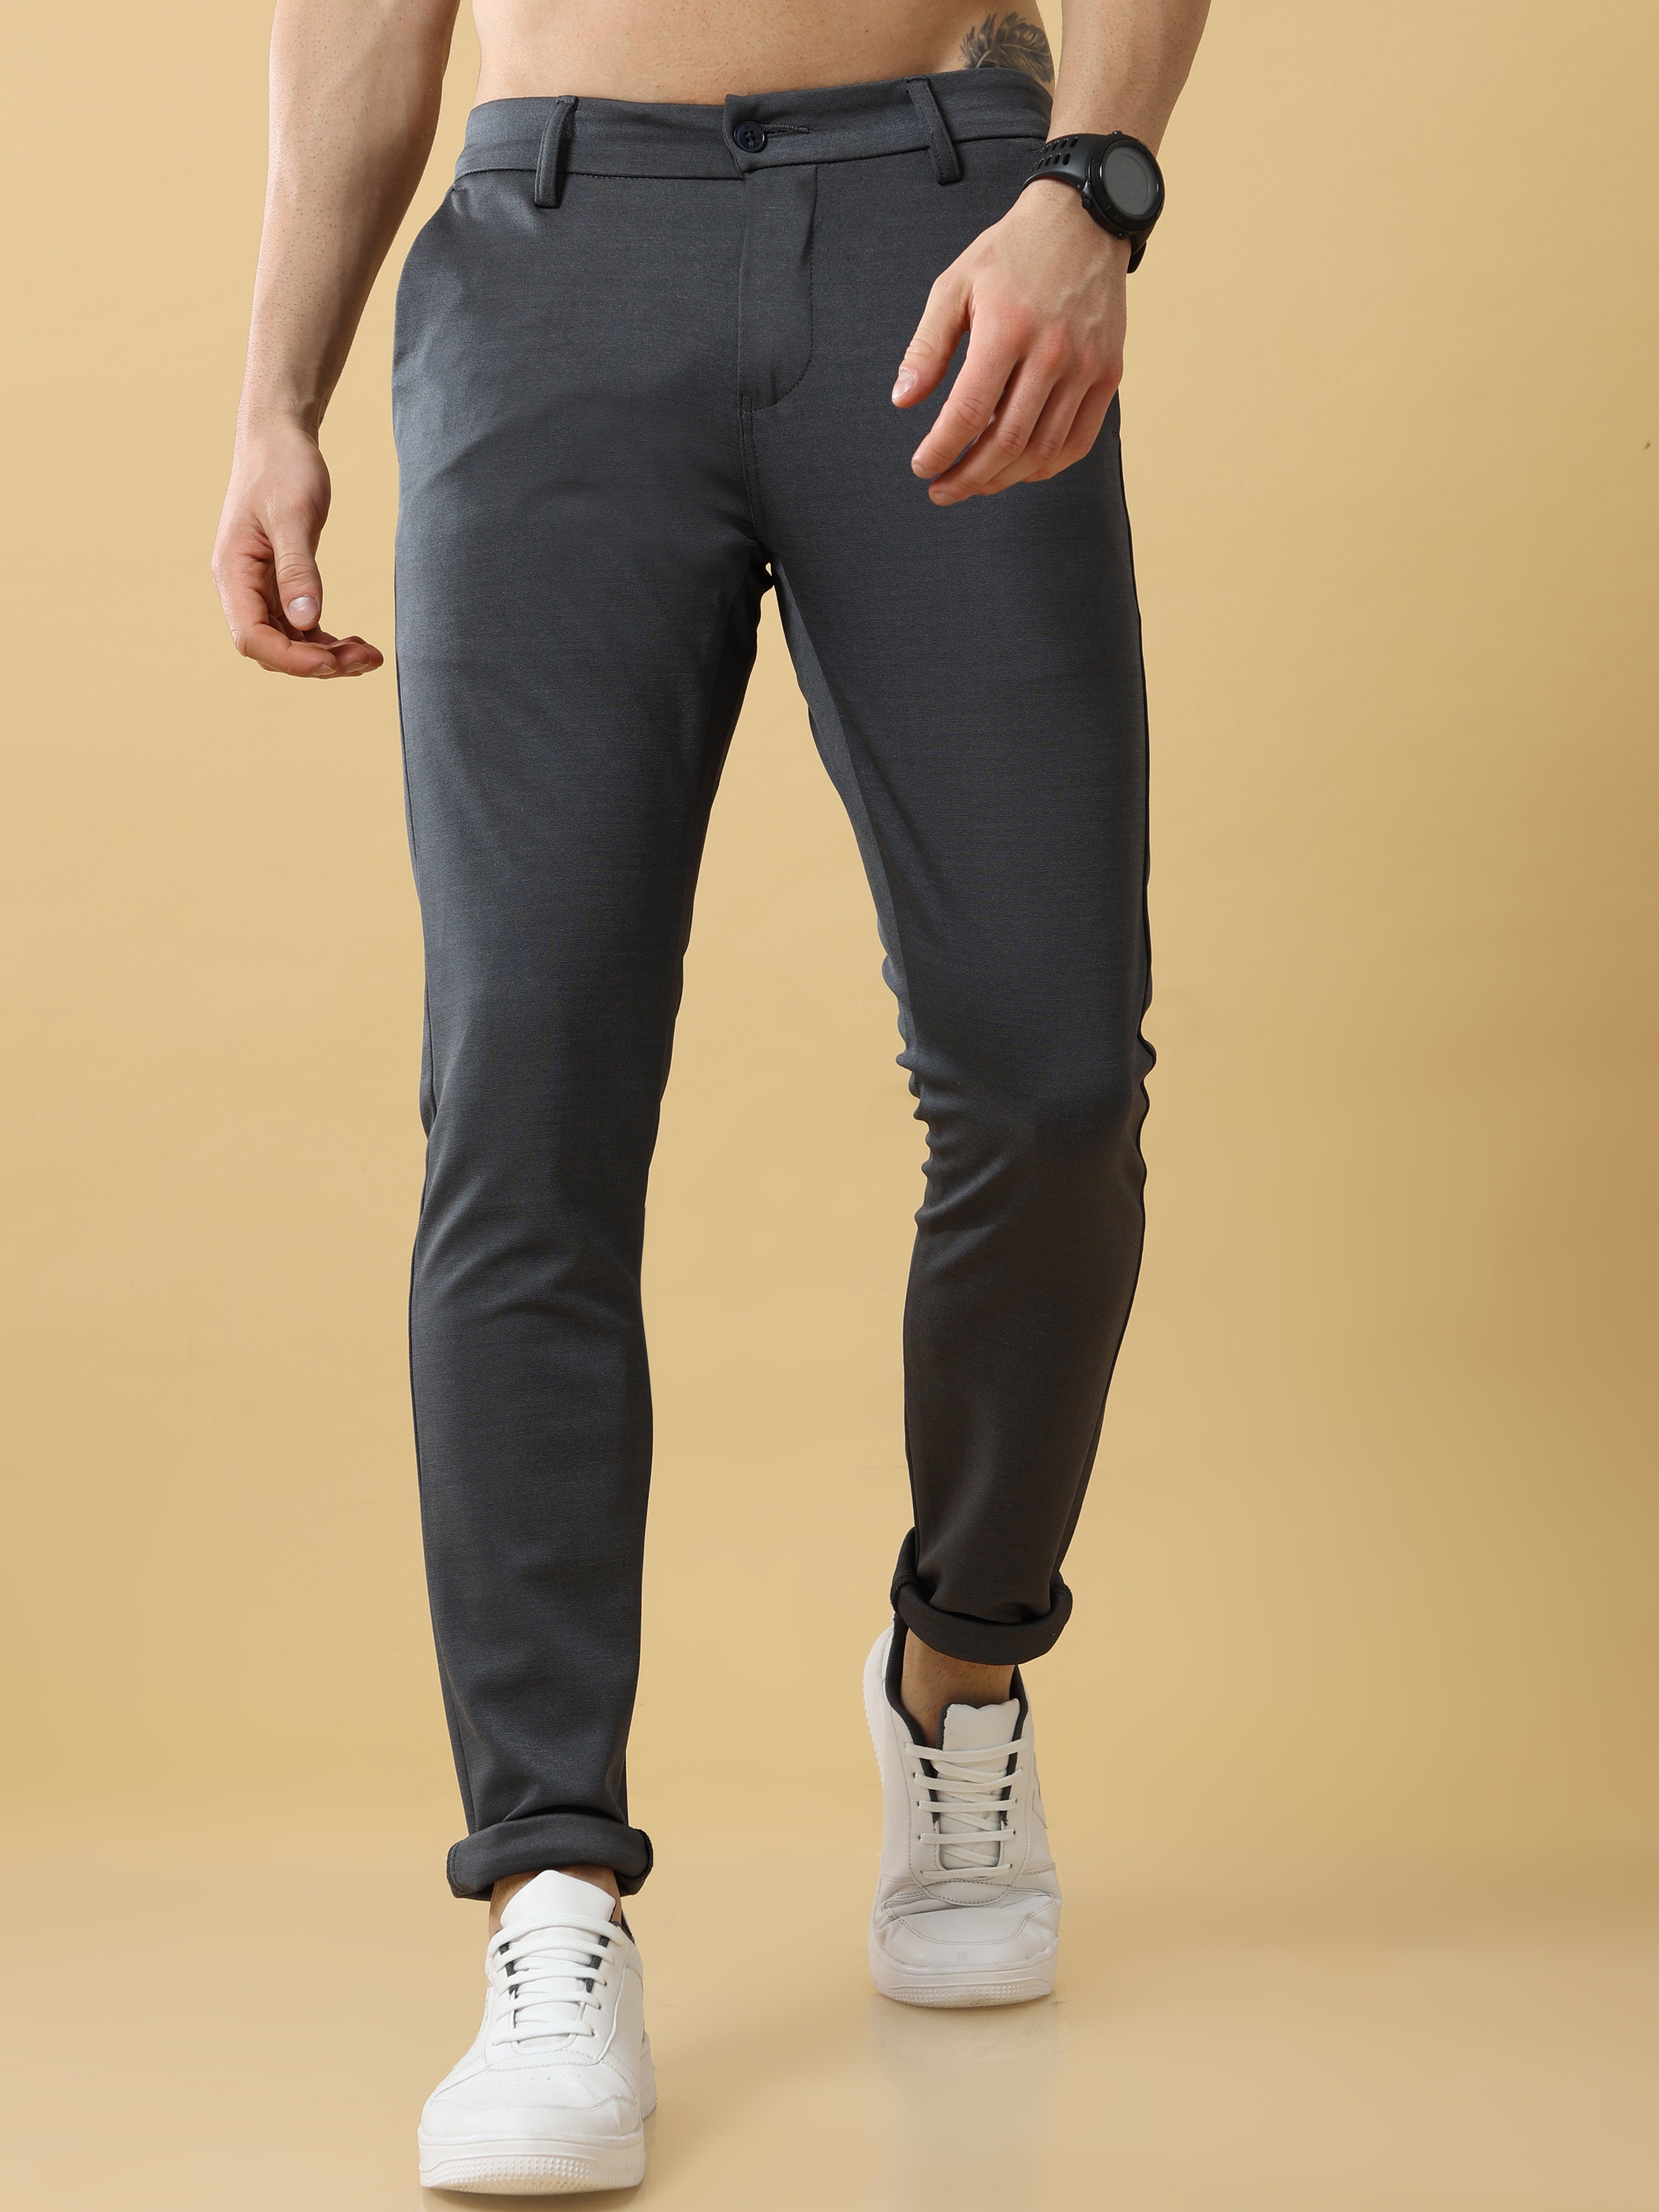 Buy Latest Coloud Grey Stretchable Pants for Men Online